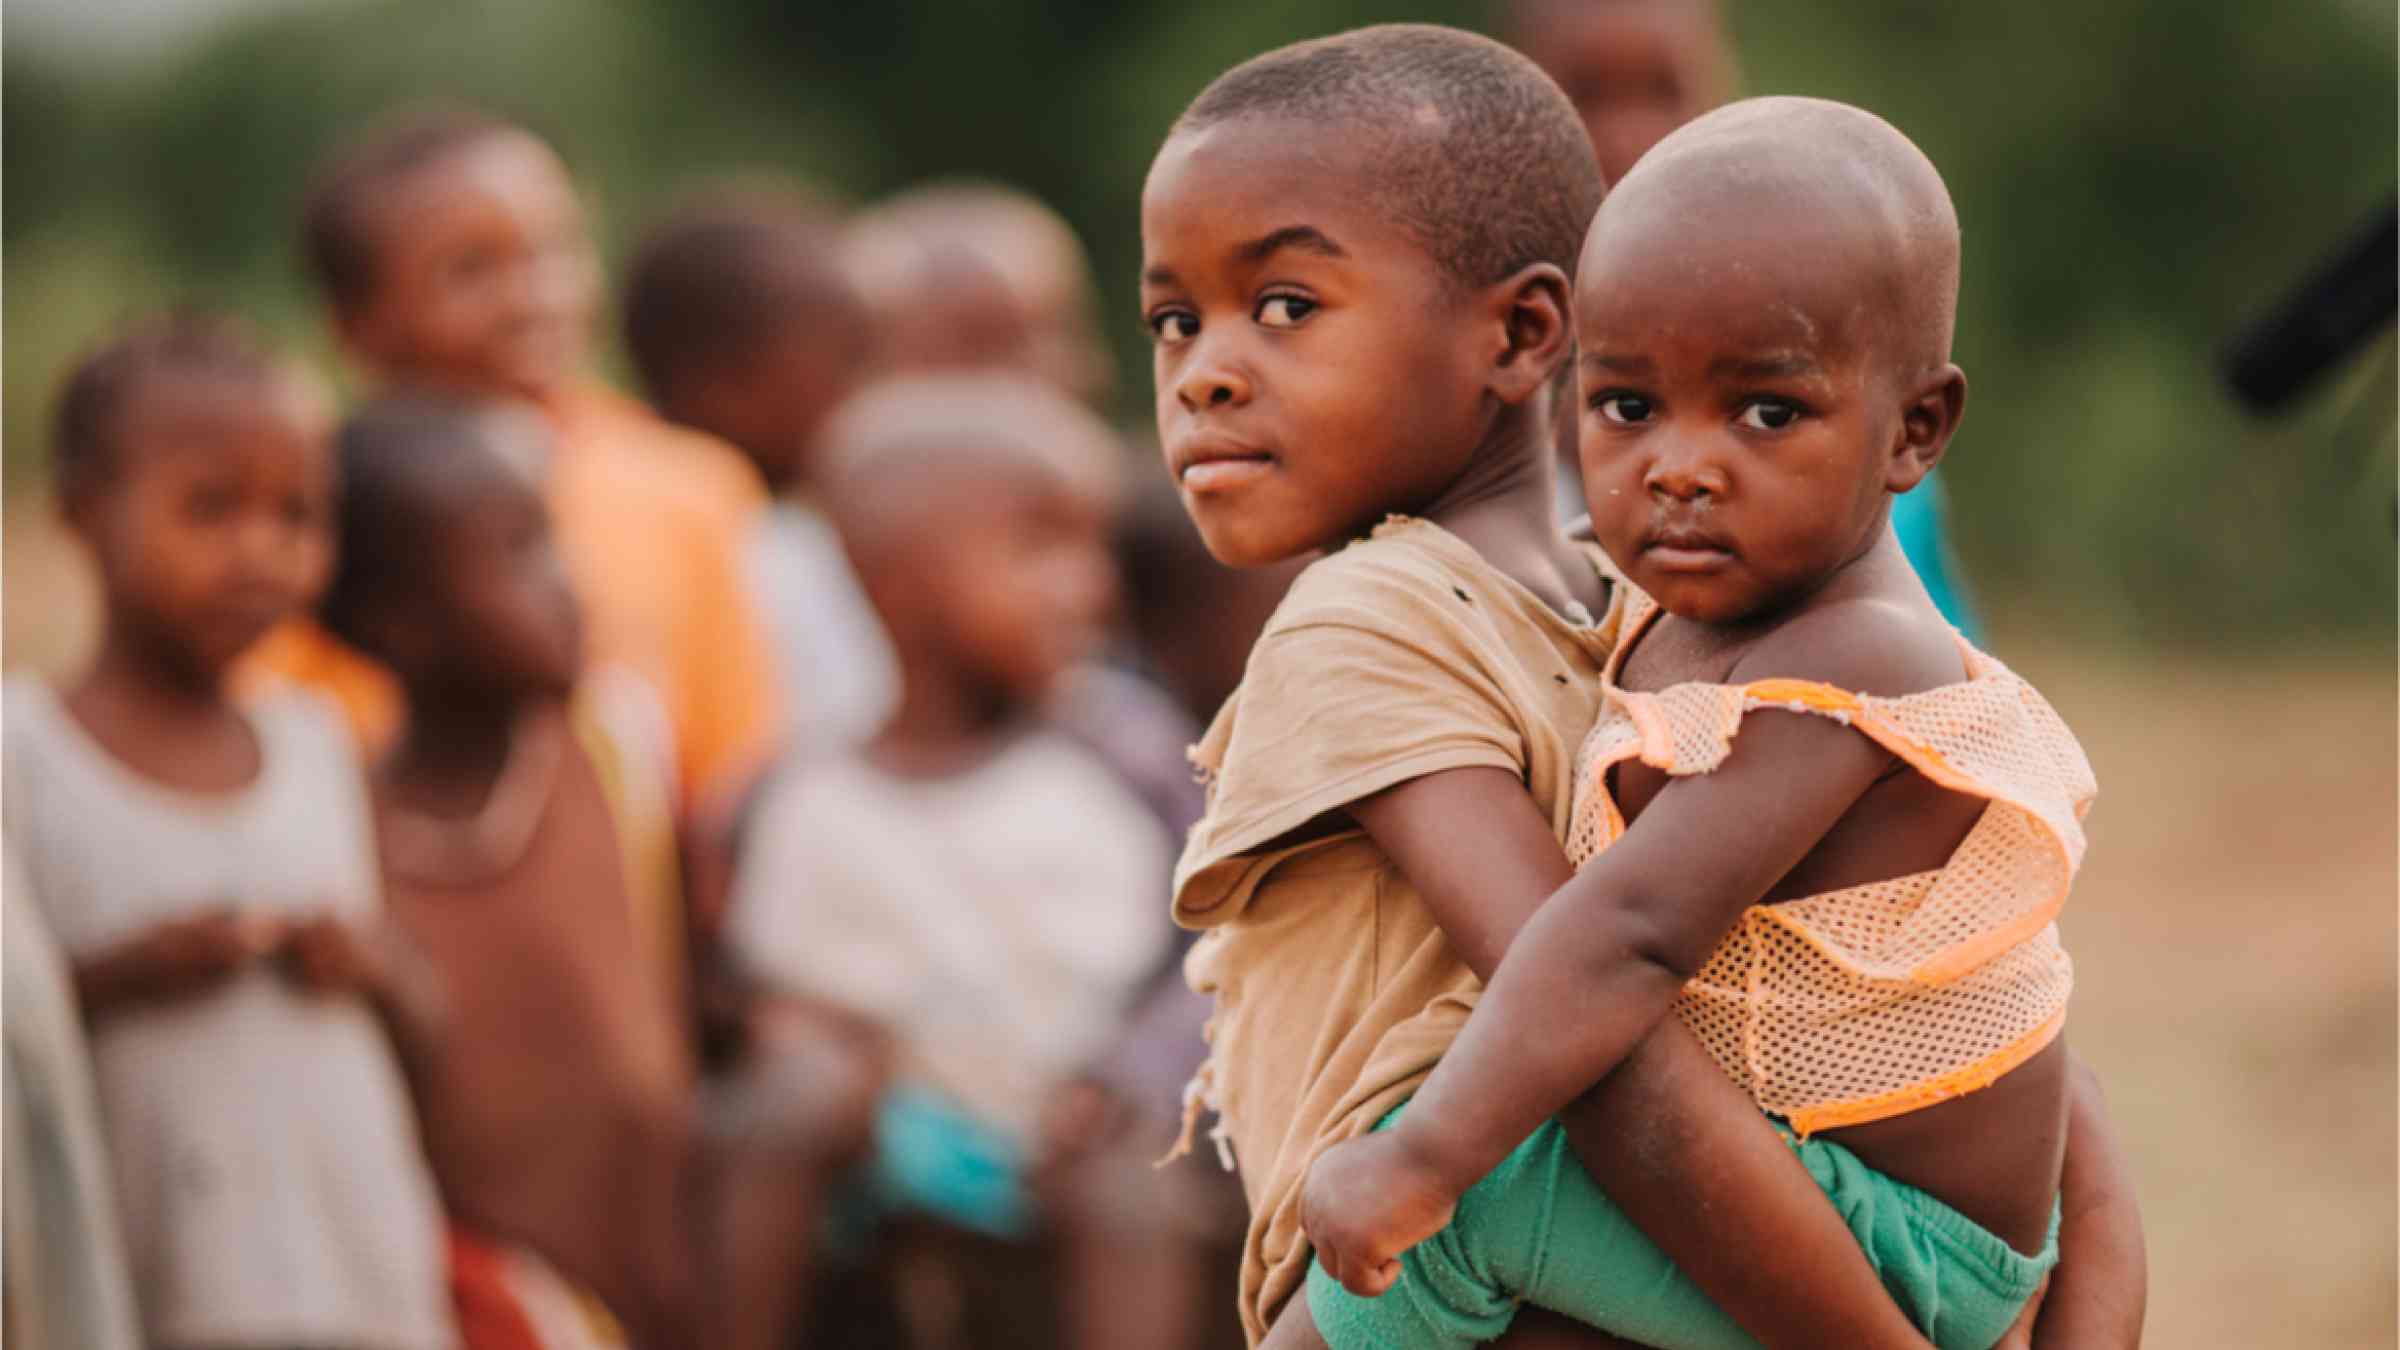 Portrait of children in Kenya, Africa.